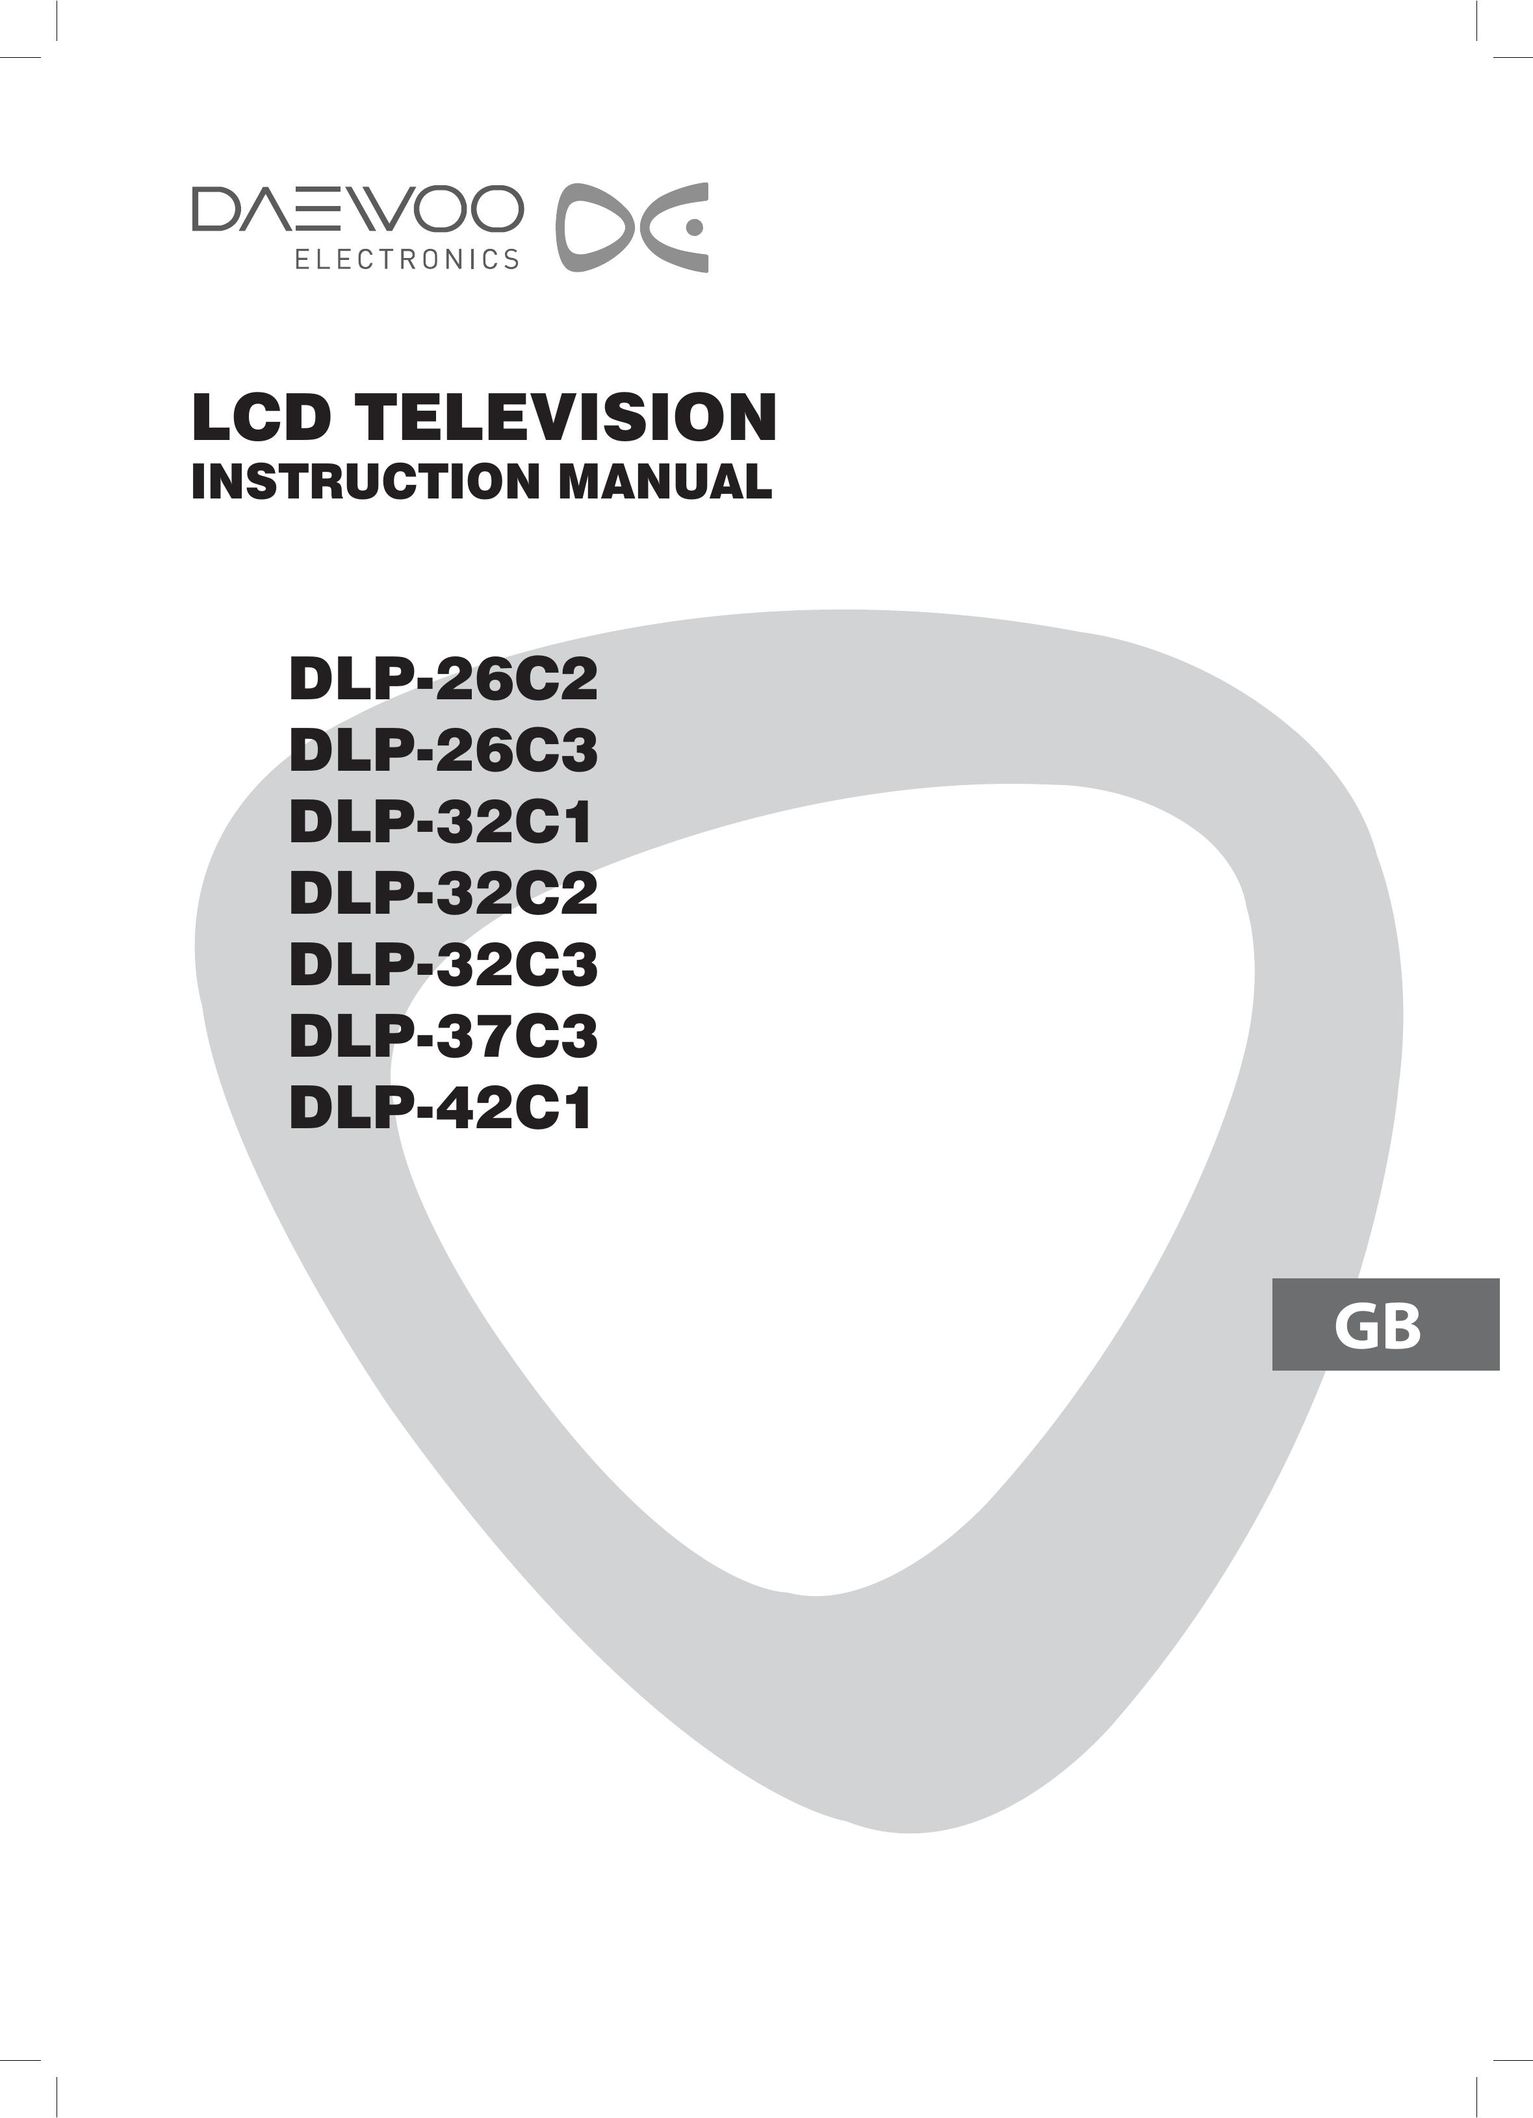 Daewoo DLP-32C3 Flat Panel Television User Manual